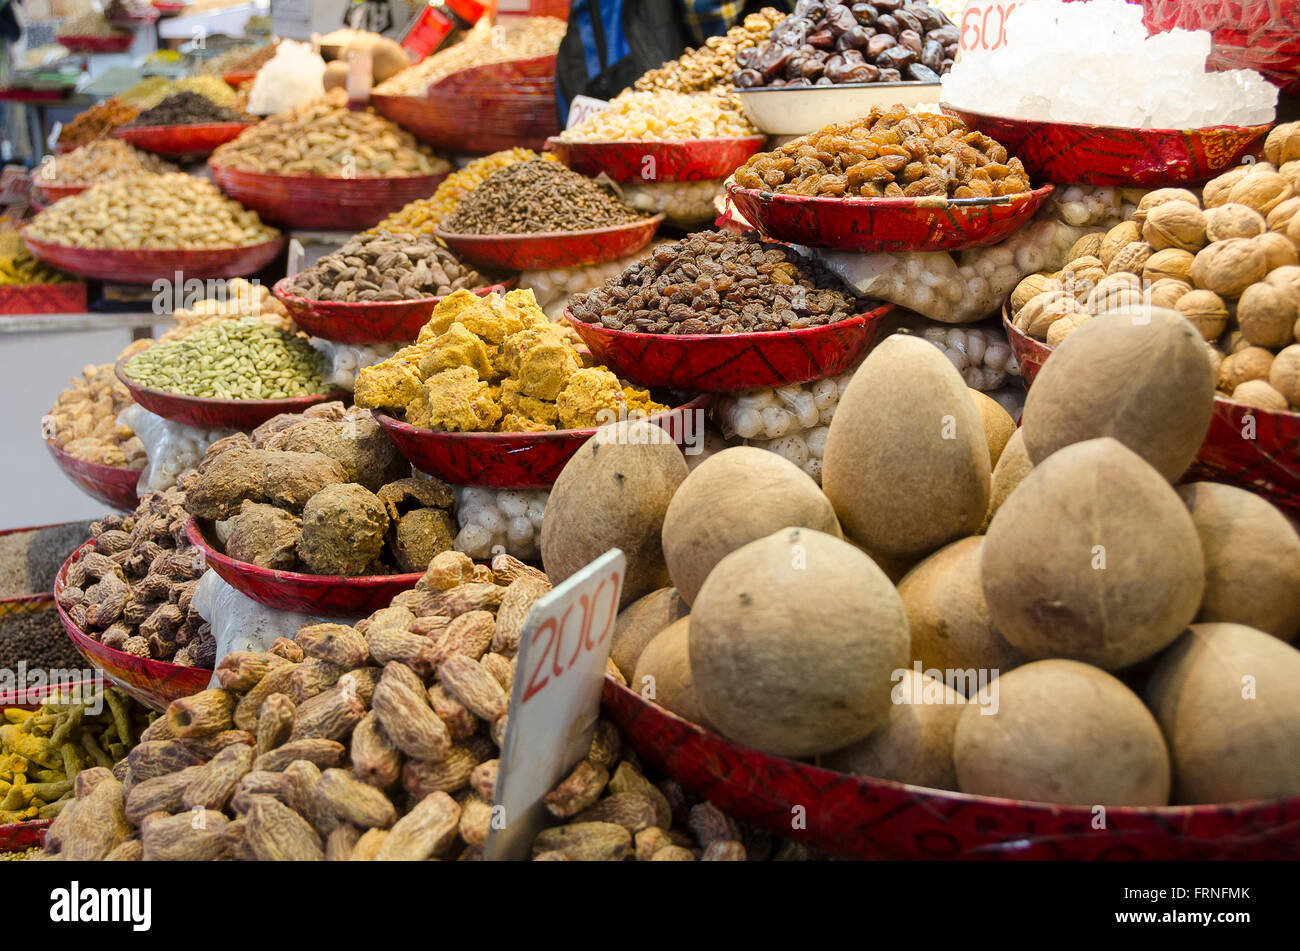 Spice market, Chandni Chowk, Old Delhi, India. Stock Photo